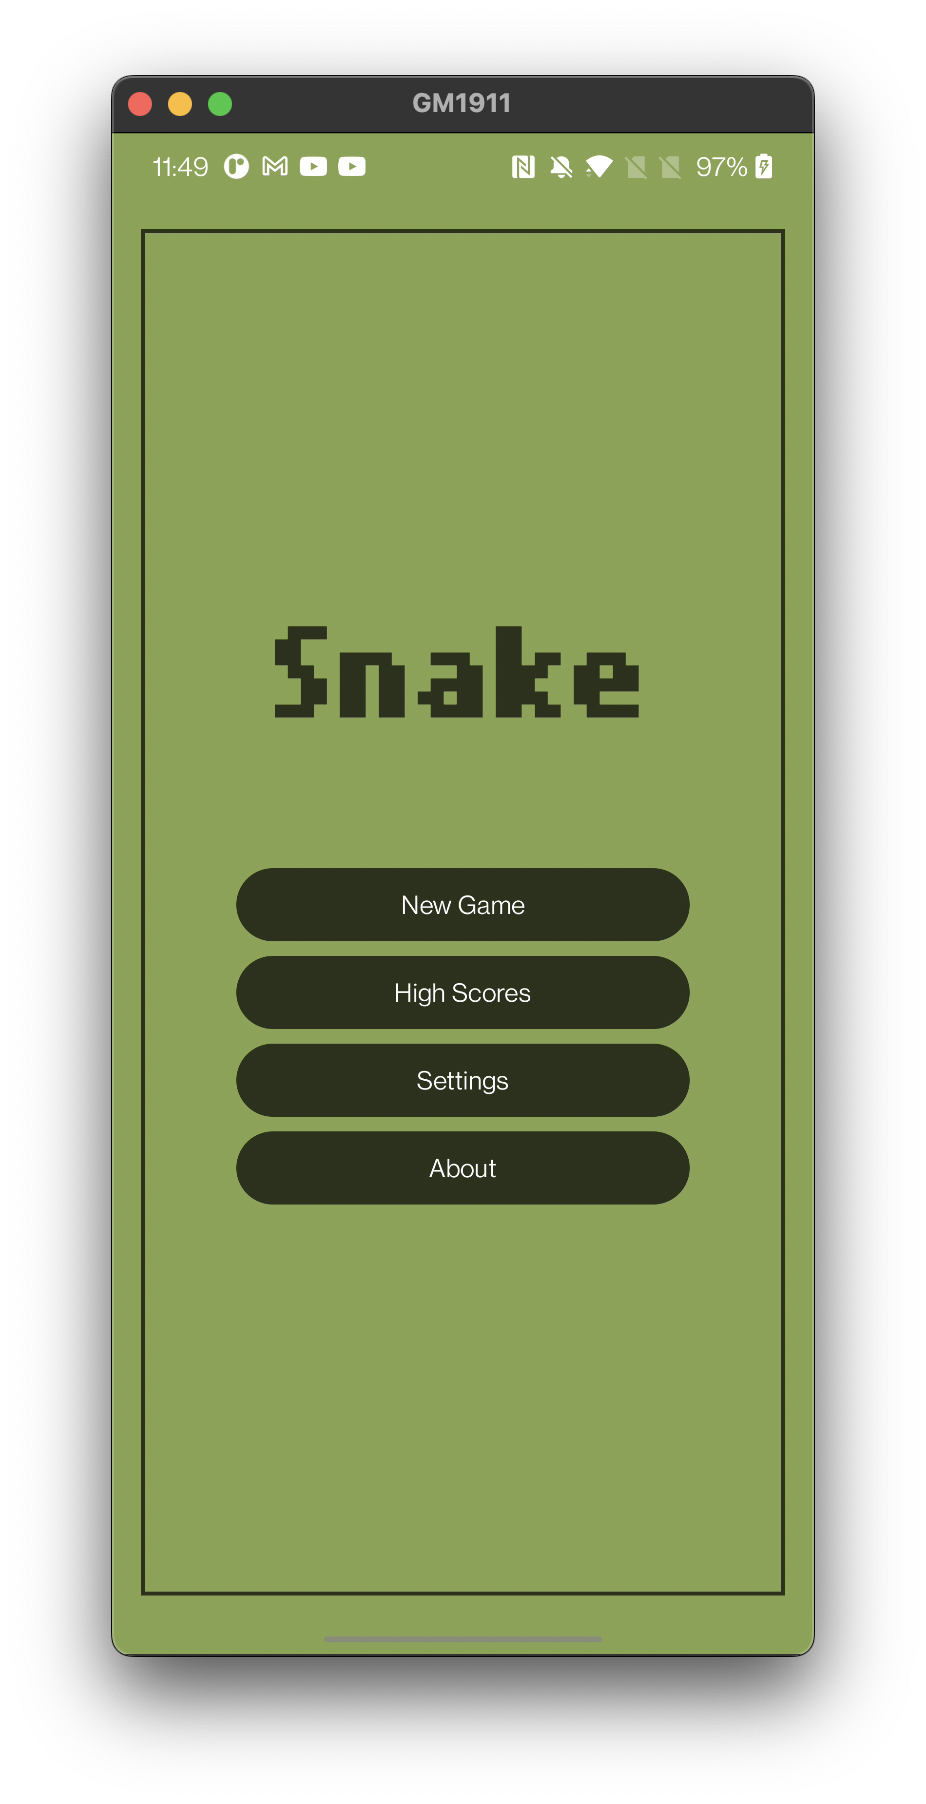 Google Snake - Snake Game APK - Free download app for Android